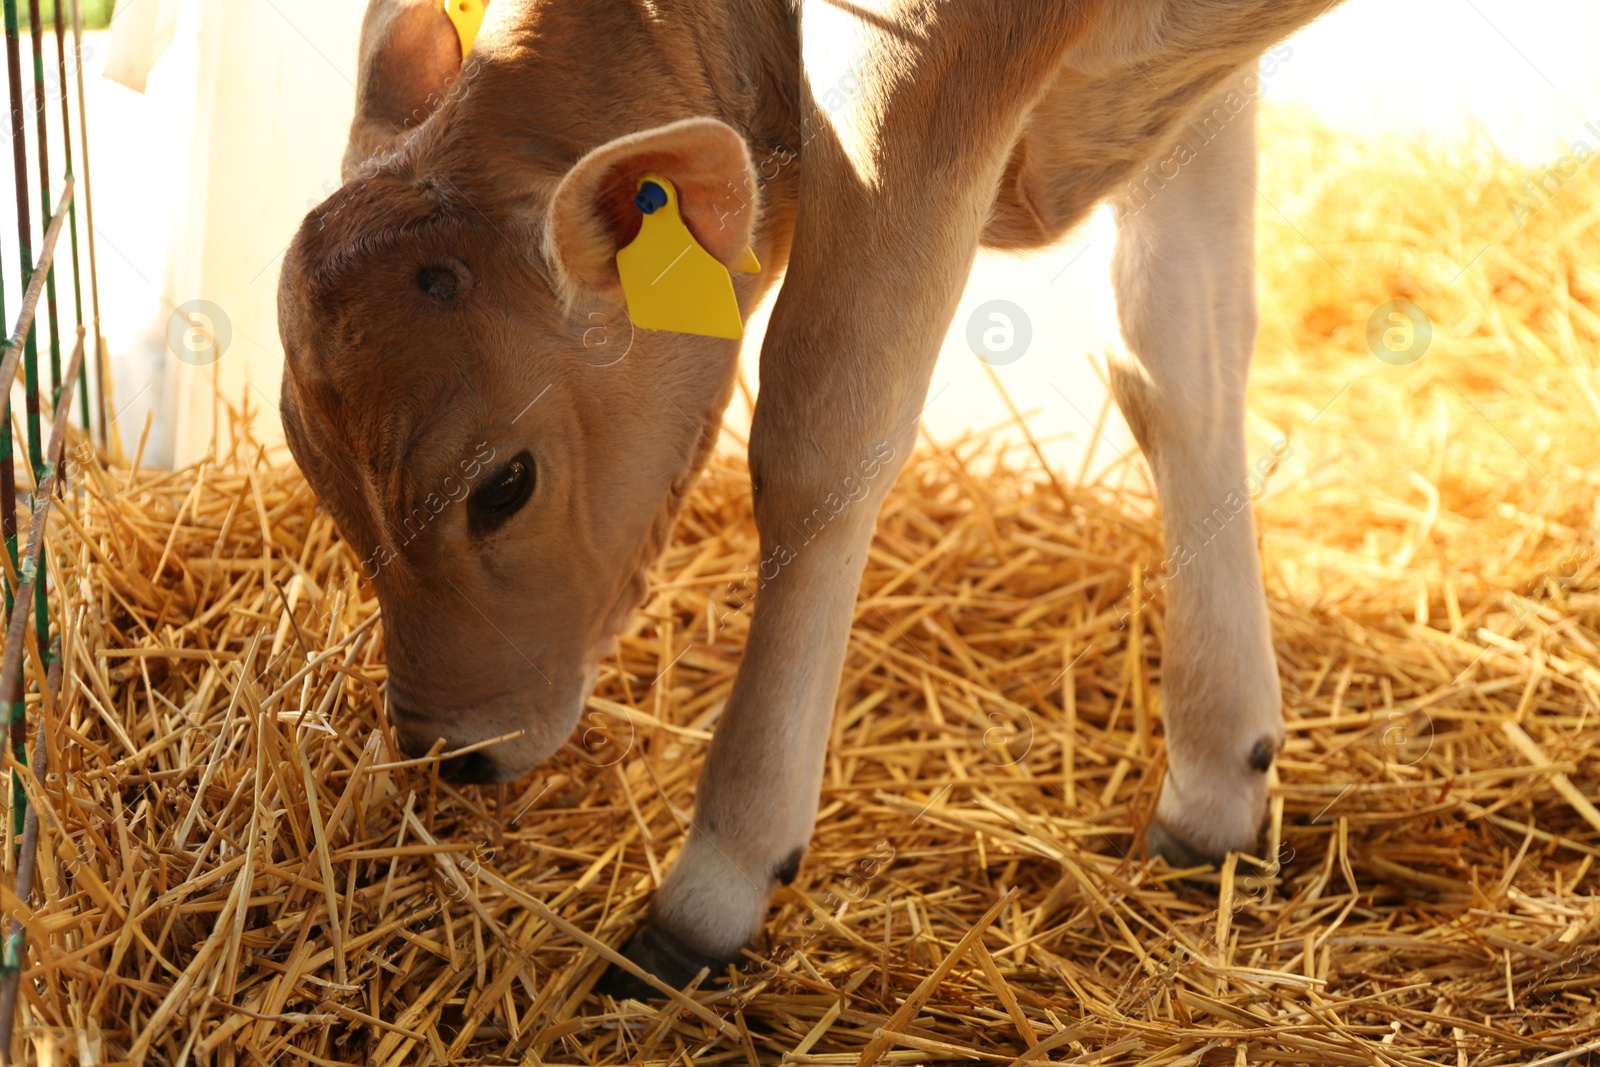 Photo of Pretty little calf eating hay on farm. Animal husbandry